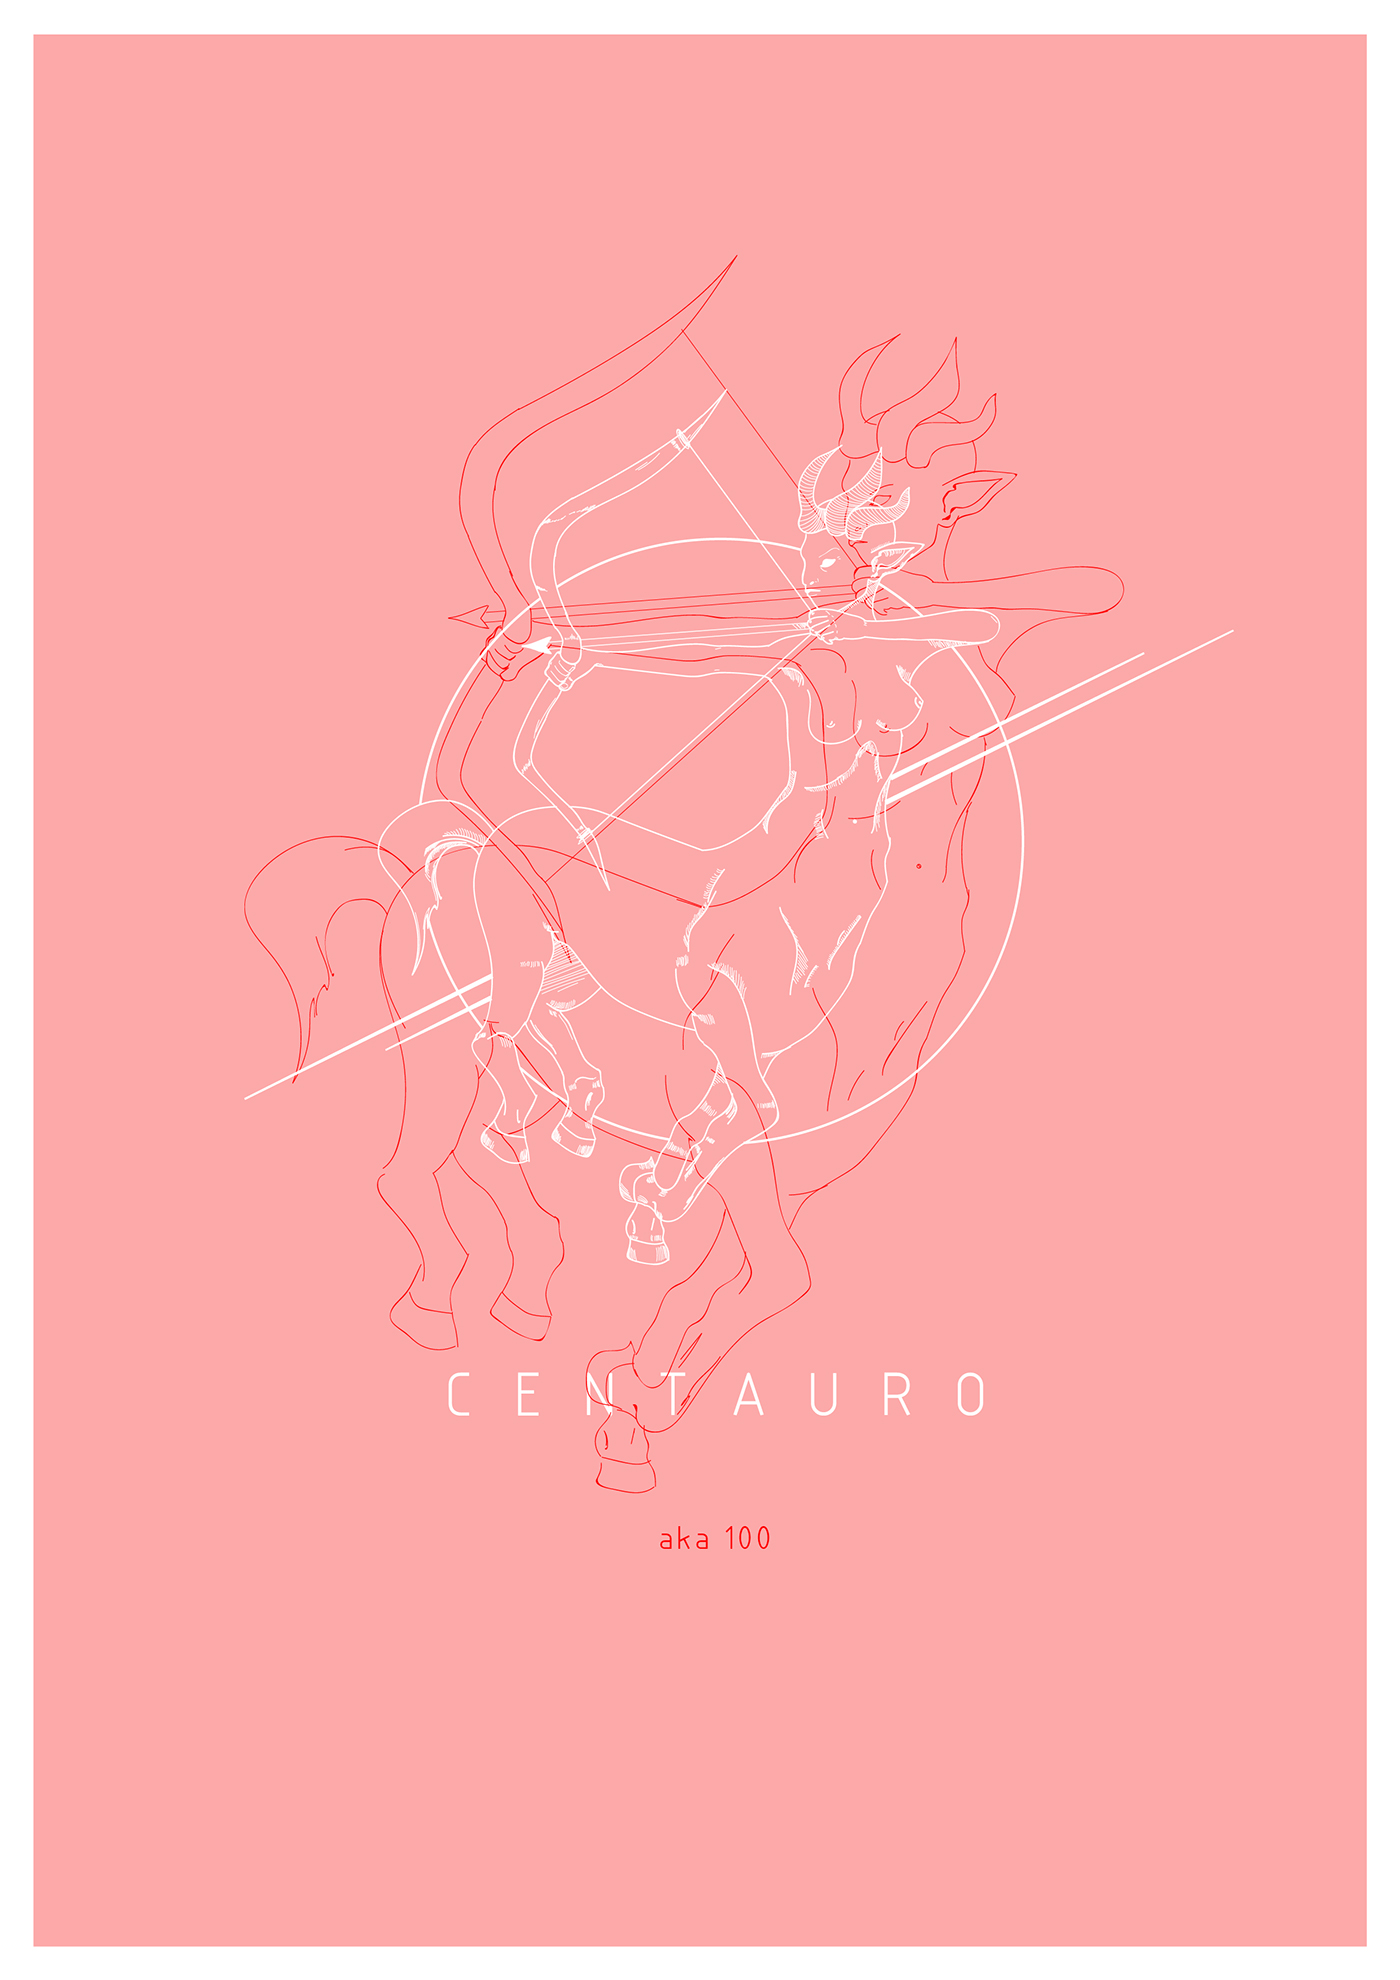 concept logo Centauro animals graphicdesign Illustrator photoshop ILLUSTRATION  Drawing 